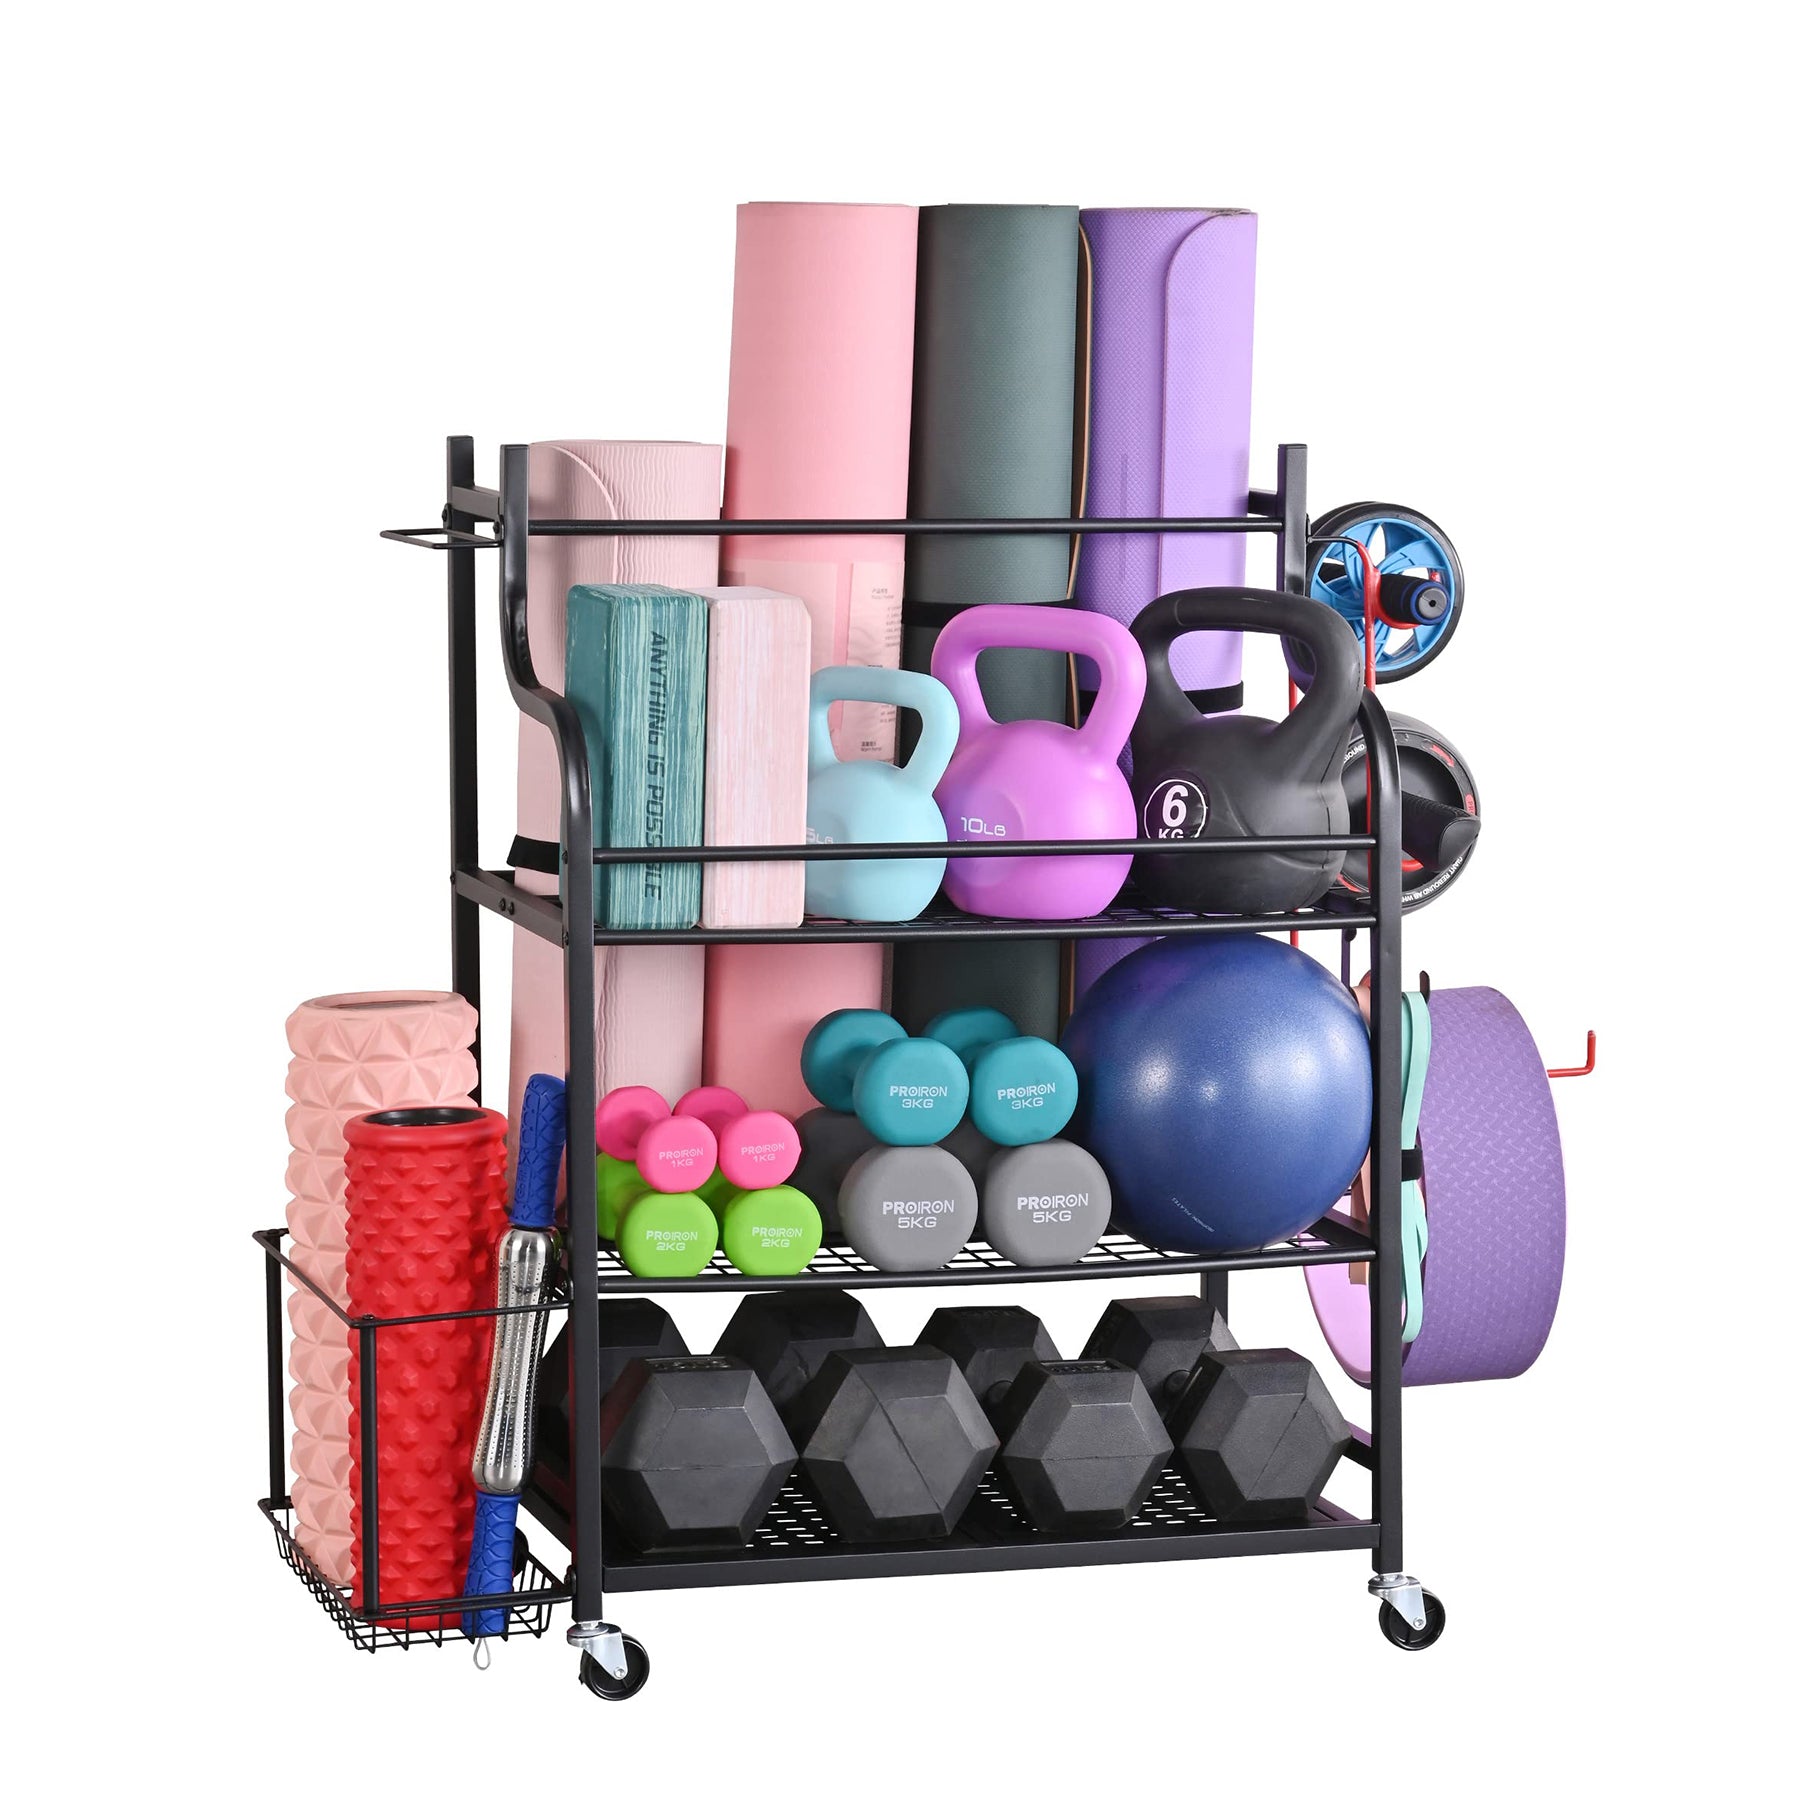 Mythinglogic Yoga Mat Storage Racks, Home Gym Weight Rack Storage for Foam  Roller, Dumbbells and Yoga Equipment